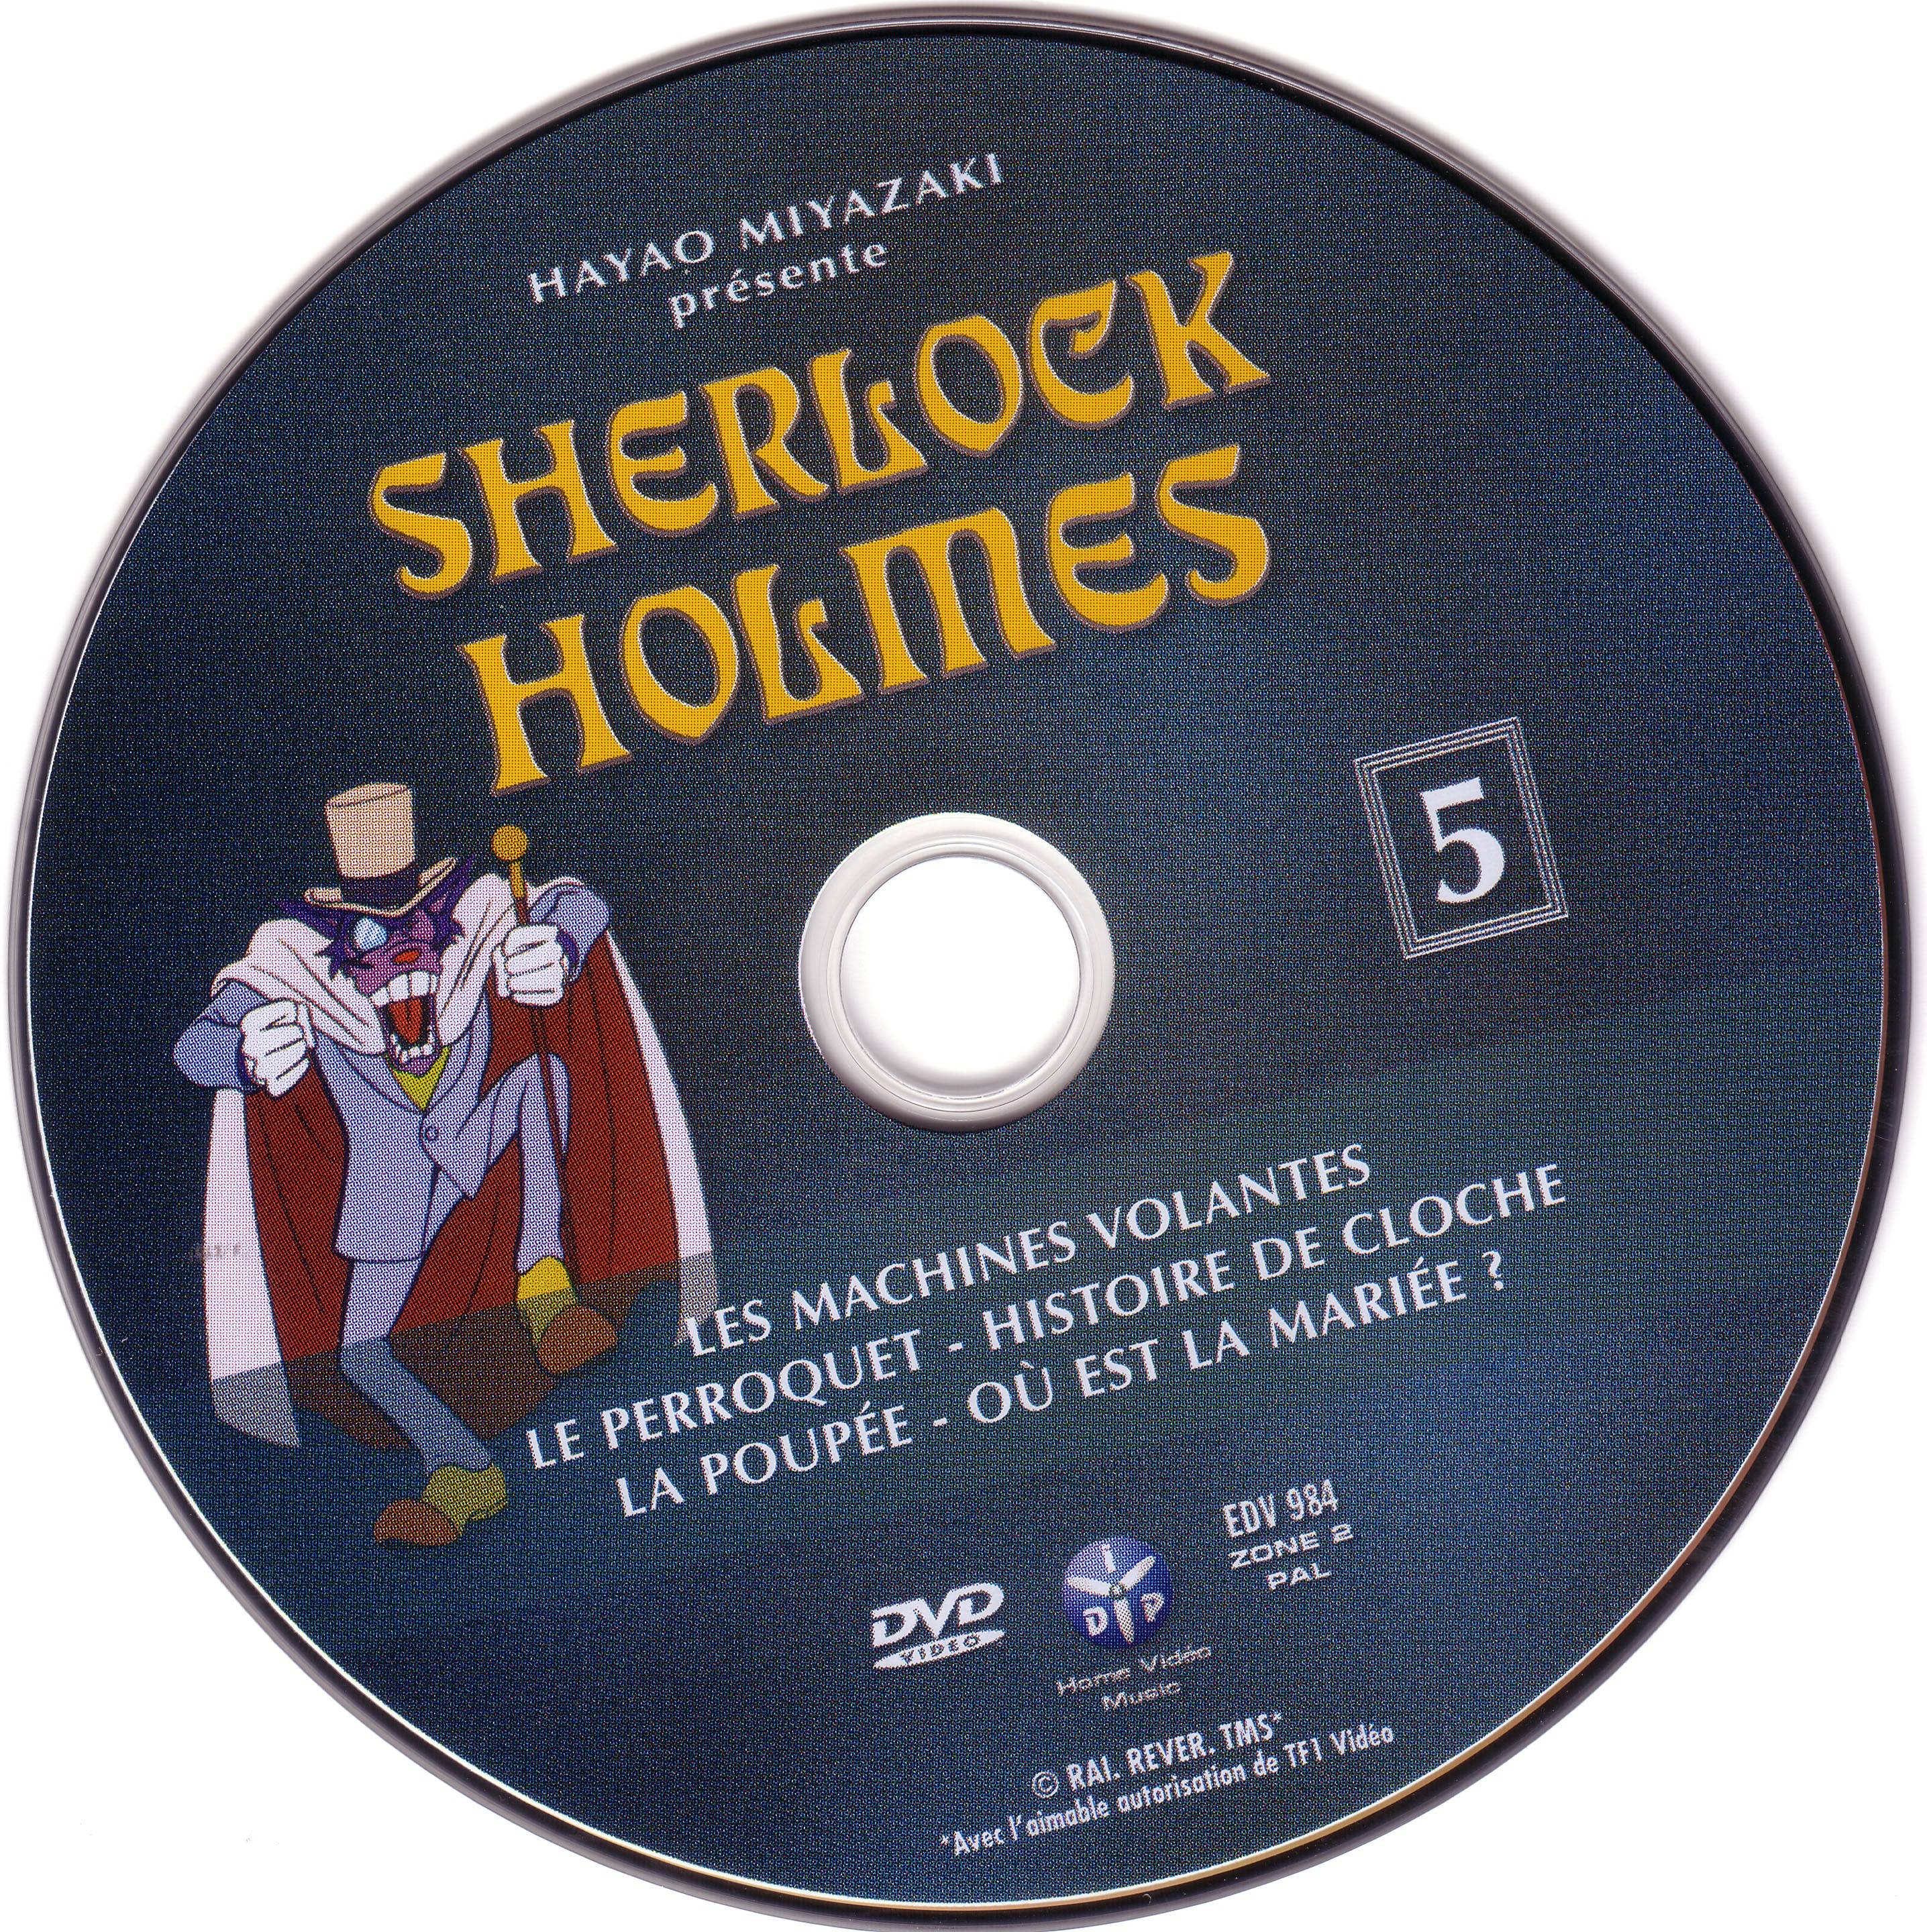 Sherlock Holmes vol 5